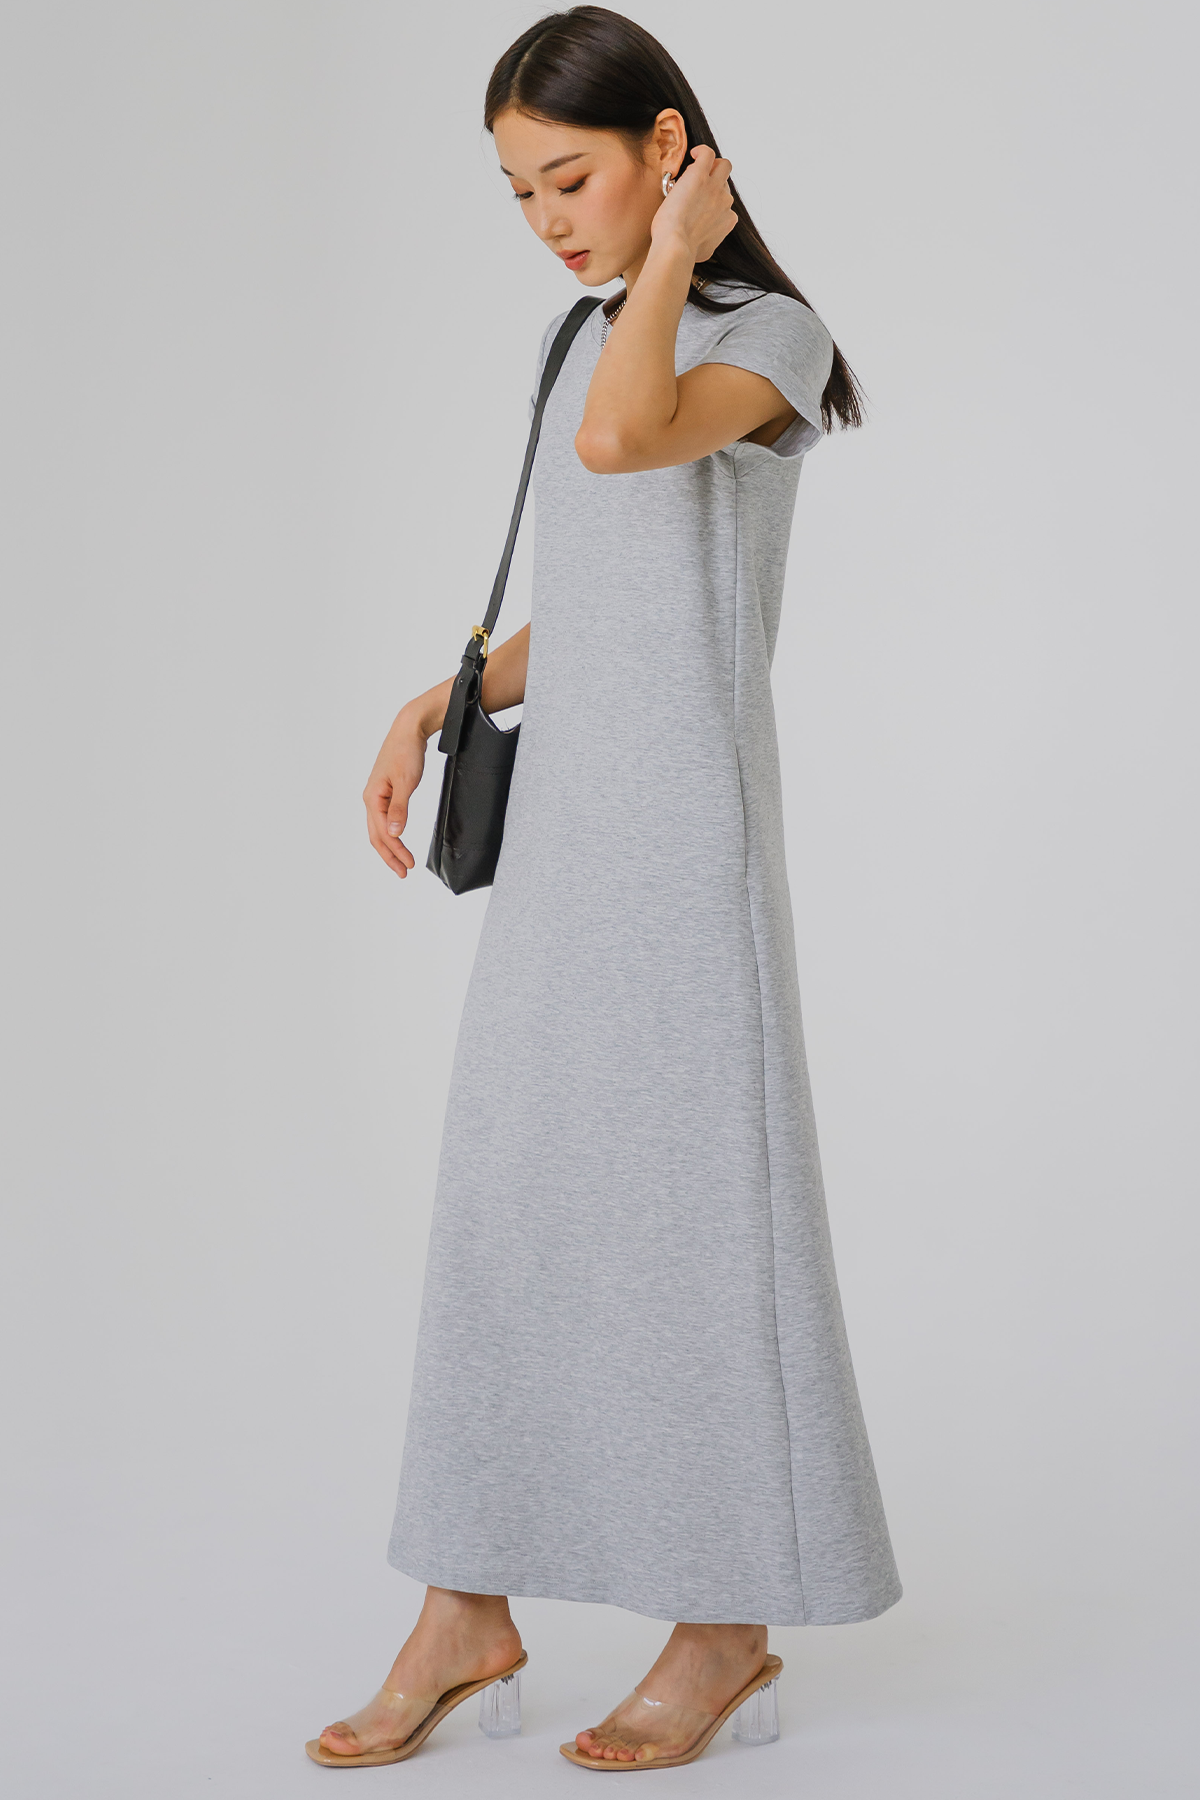 Backorder* For Keeps Round Neck Midaxi Dress (Light Grey)